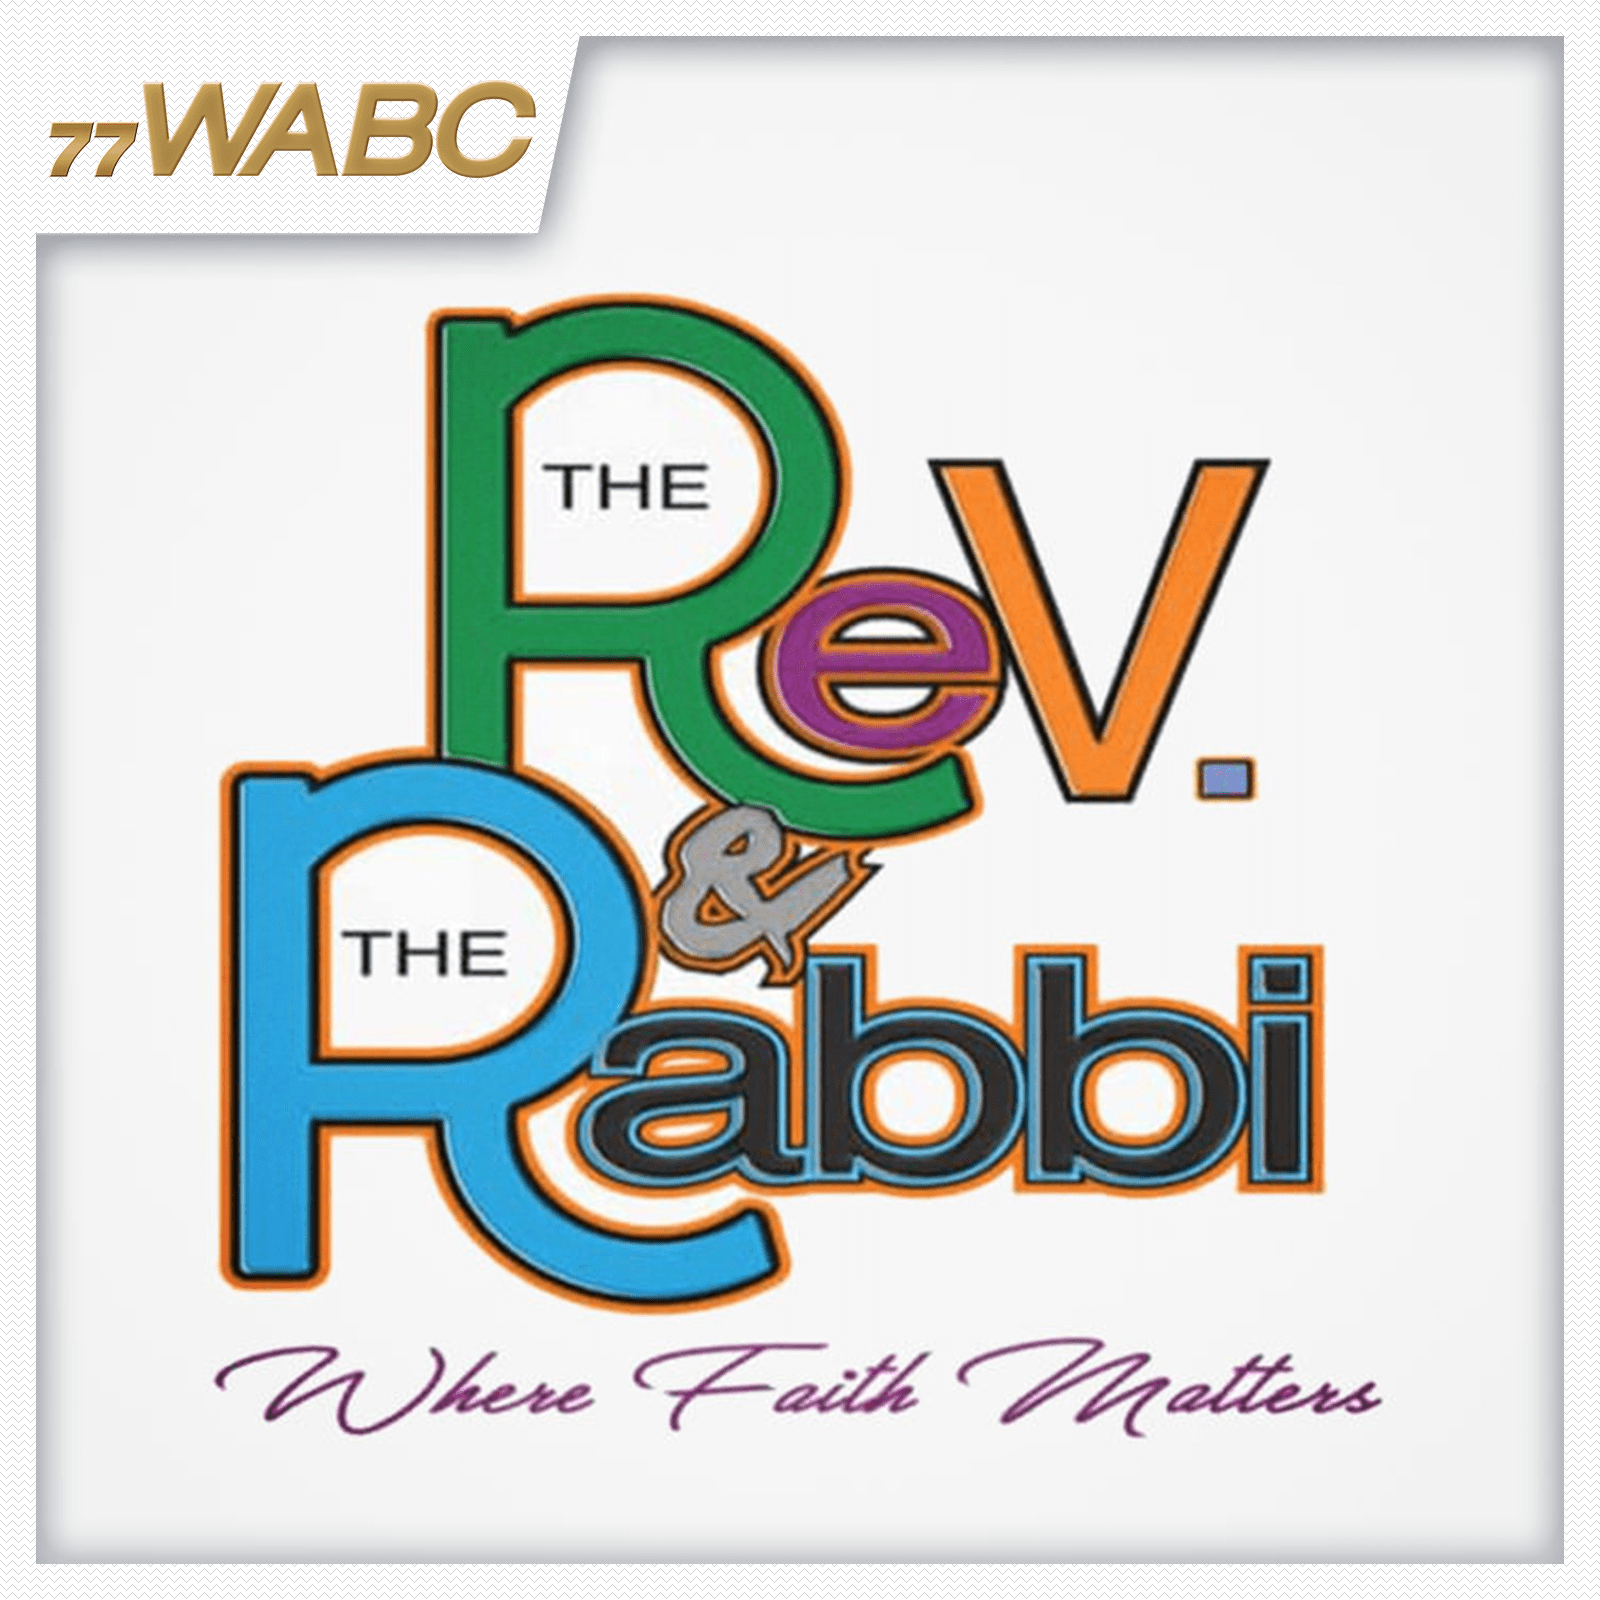 rev-and-the-rabbi-new-logo712195